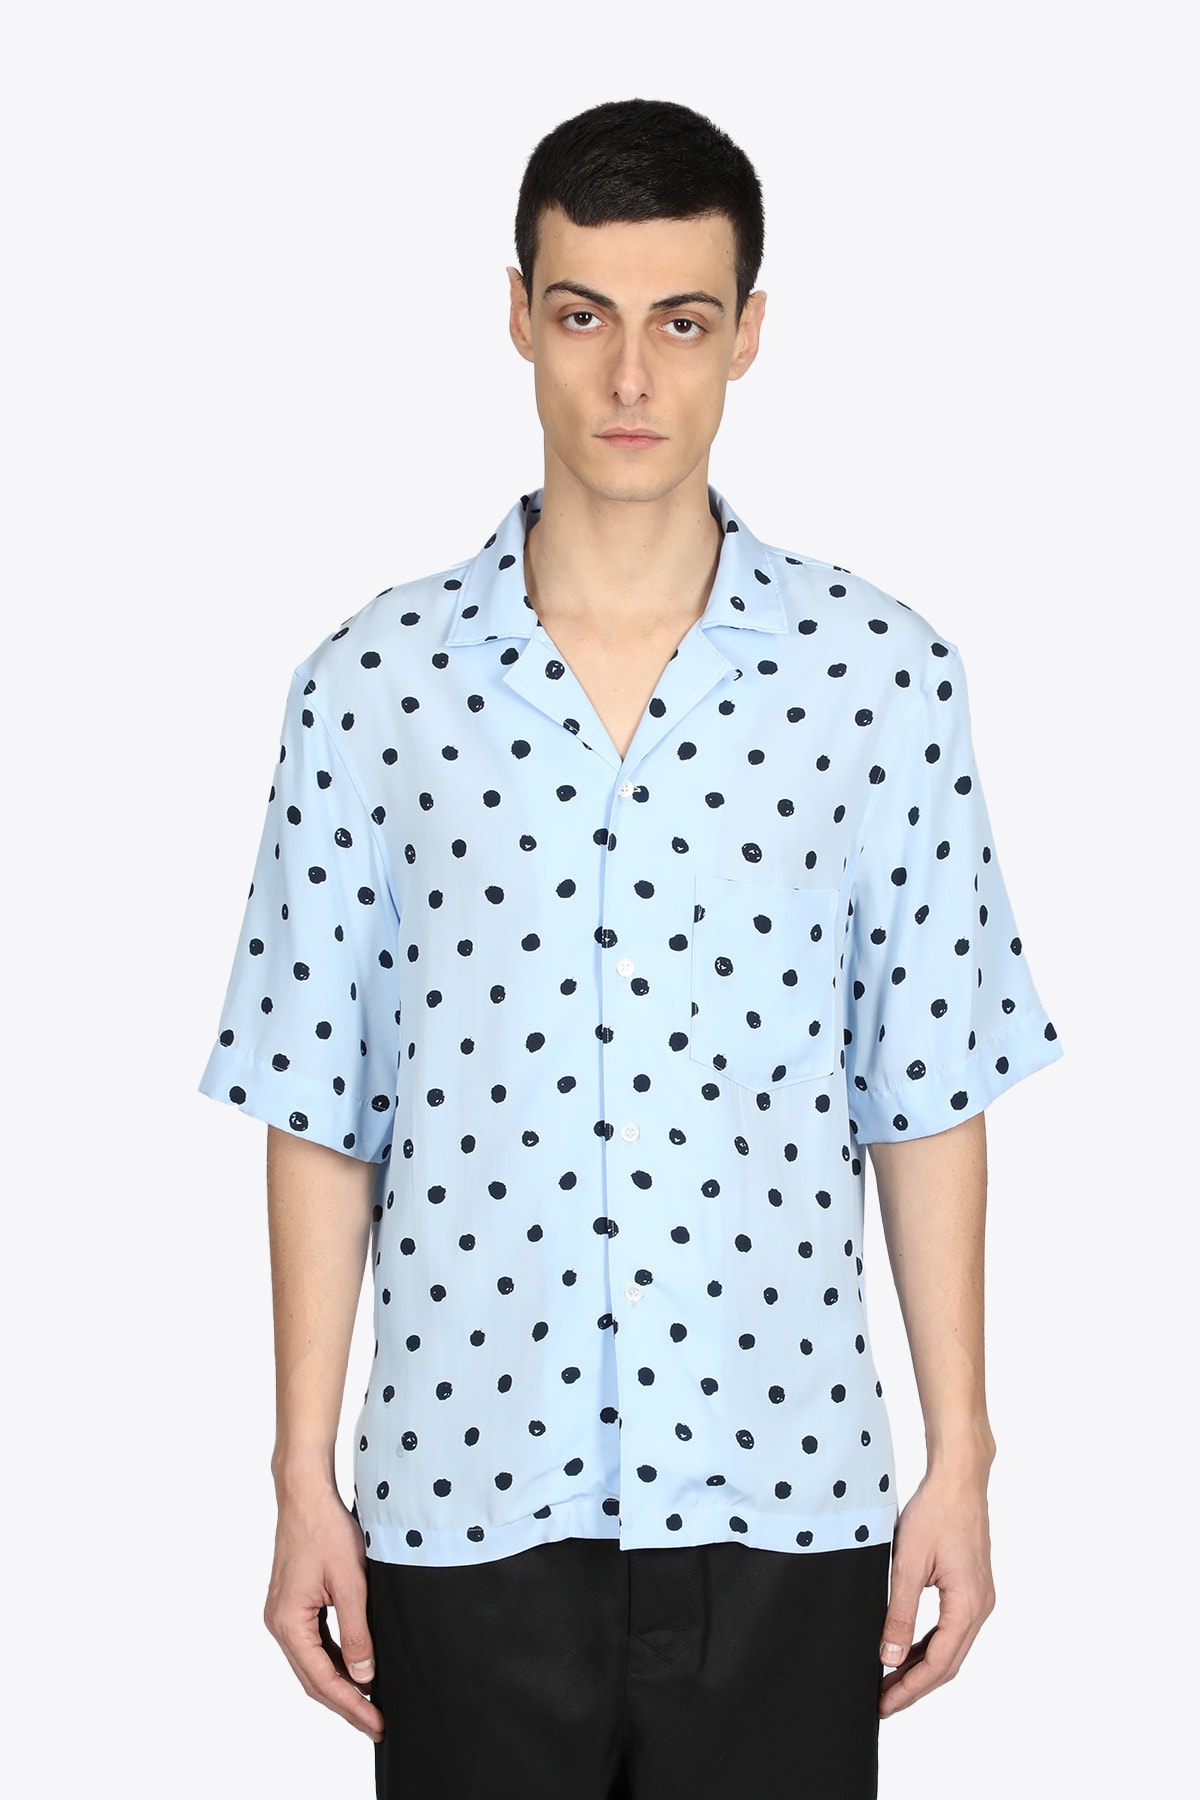 Aglini Pois Blu Light blue polka dots lyocell shirt with short sleeves